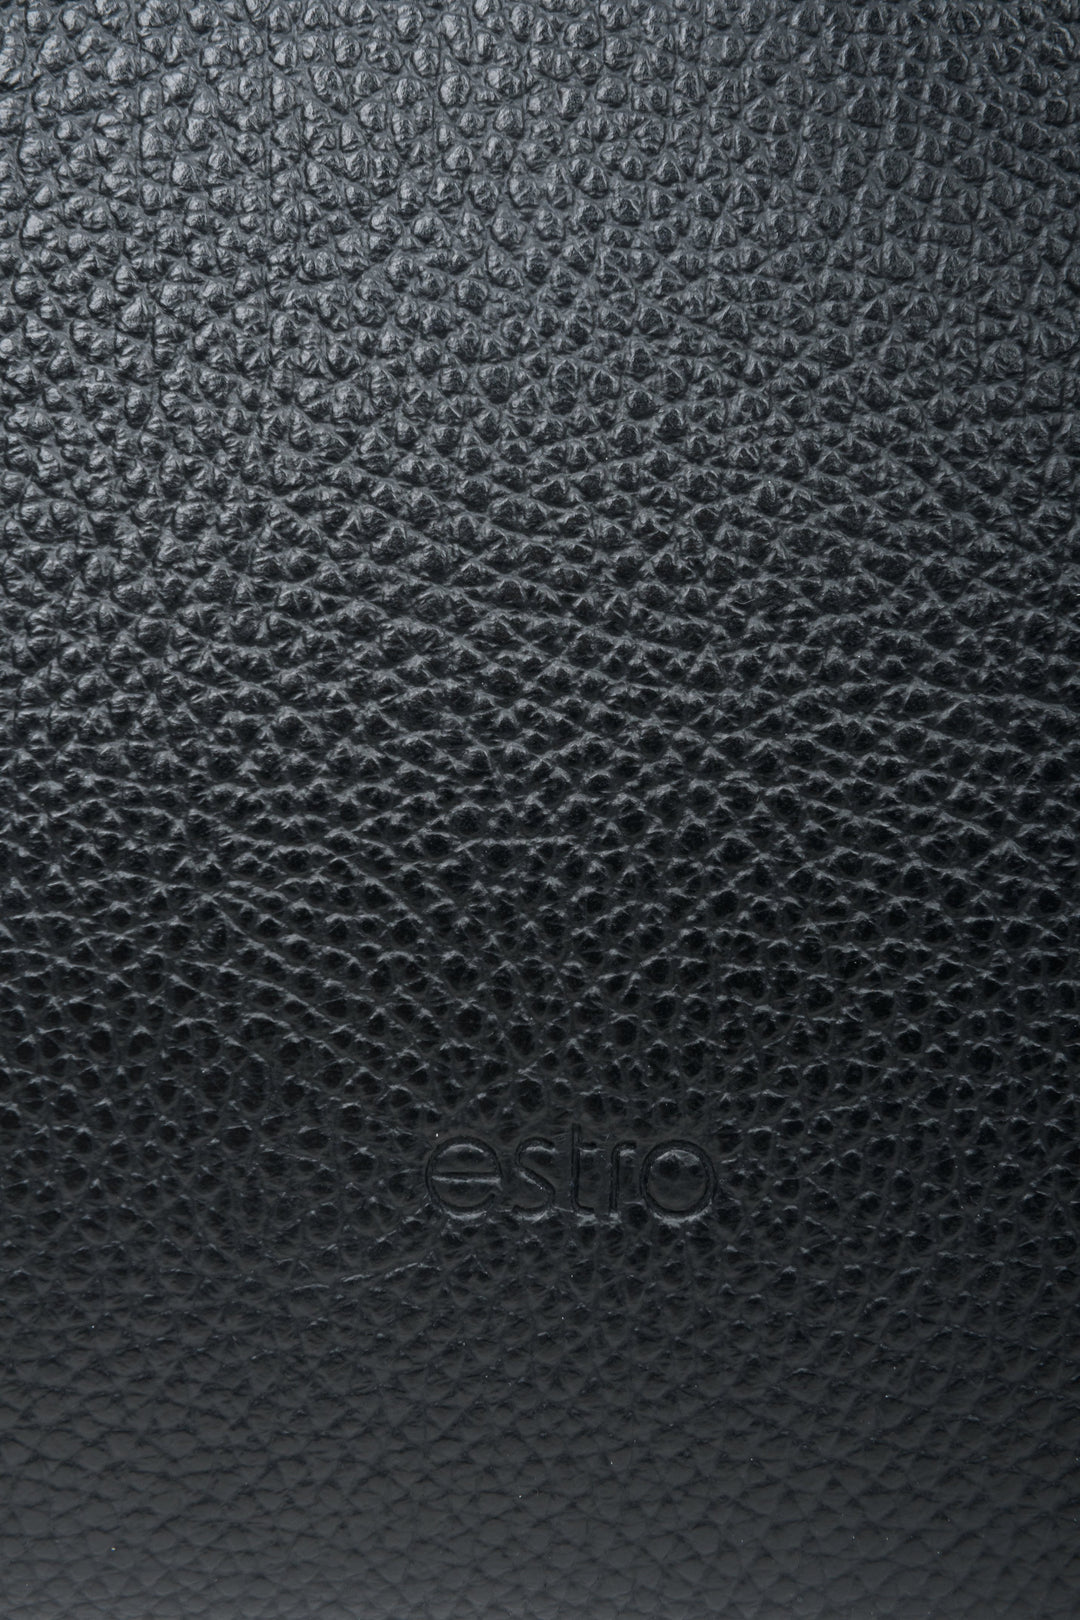 Leather, women's black shoulder bag by Estro - close-up of the details.